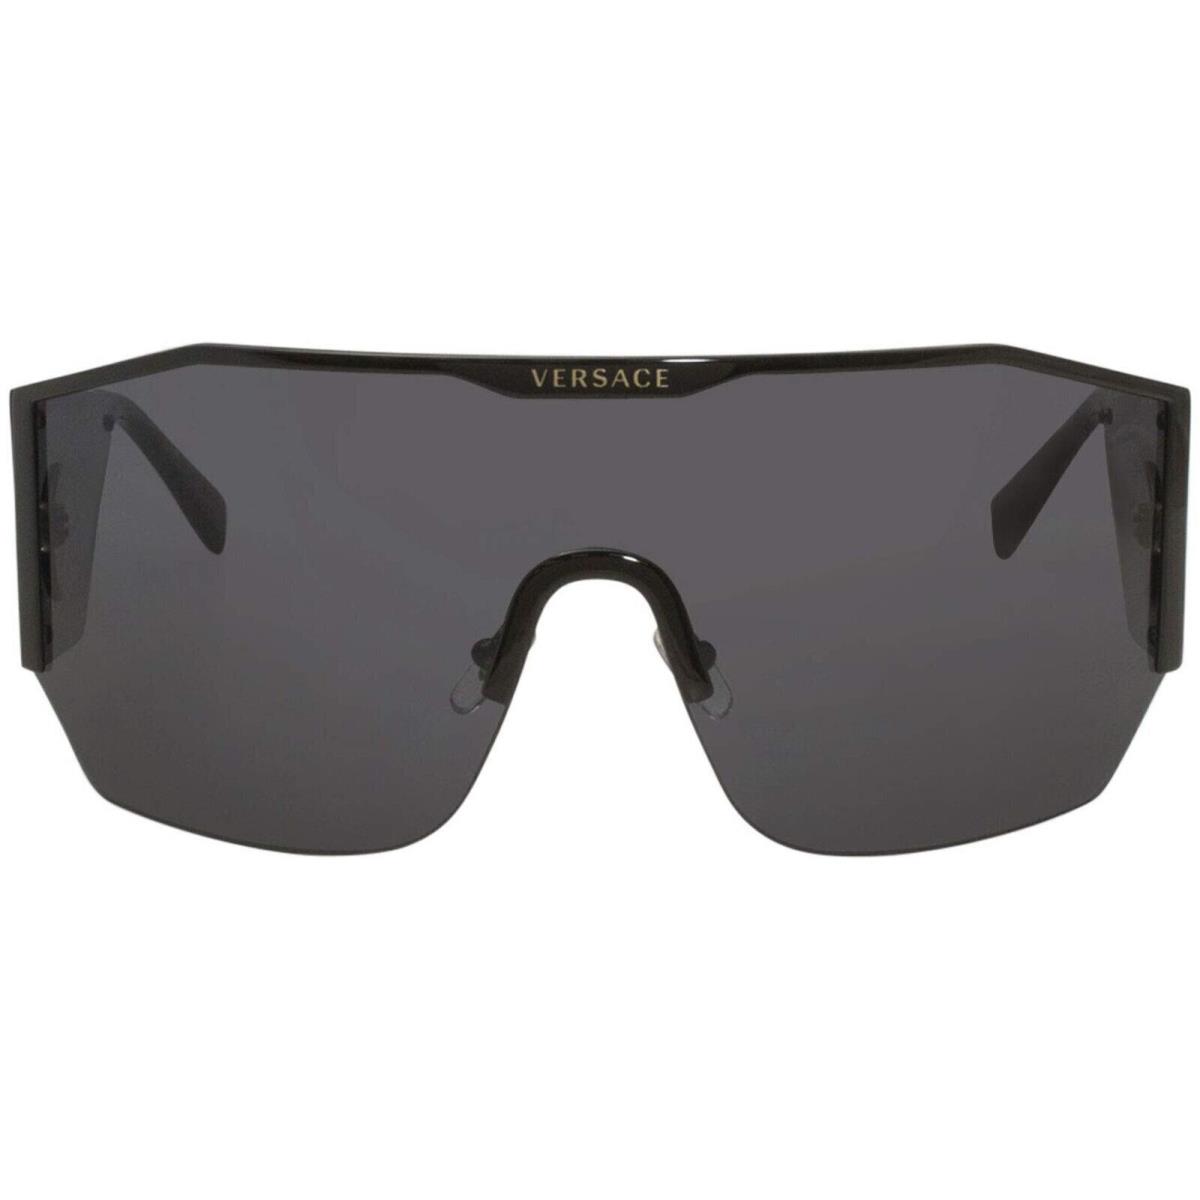 Versace Man Sunglasses Black Lenses Metal Frame 41mm